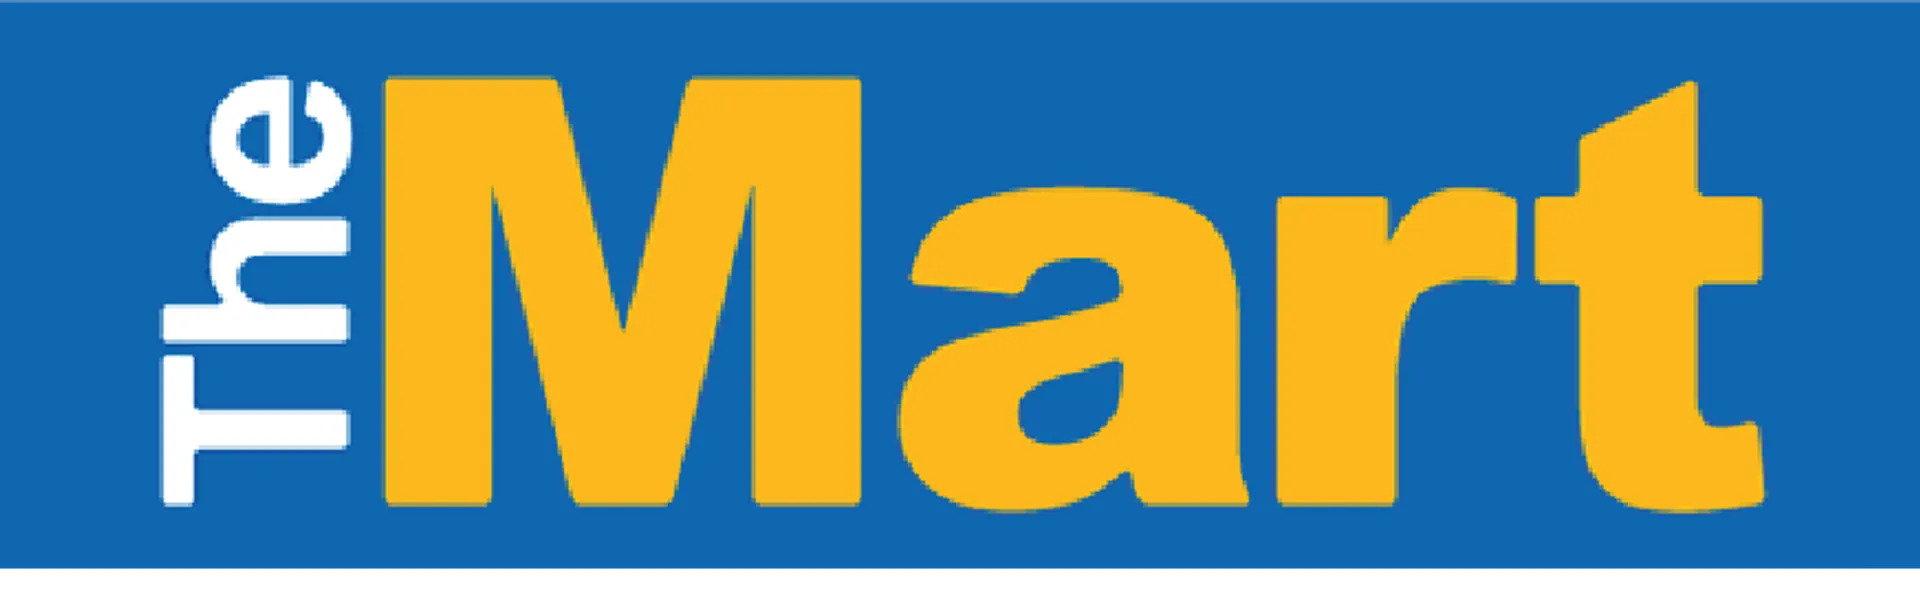 THE MART logo